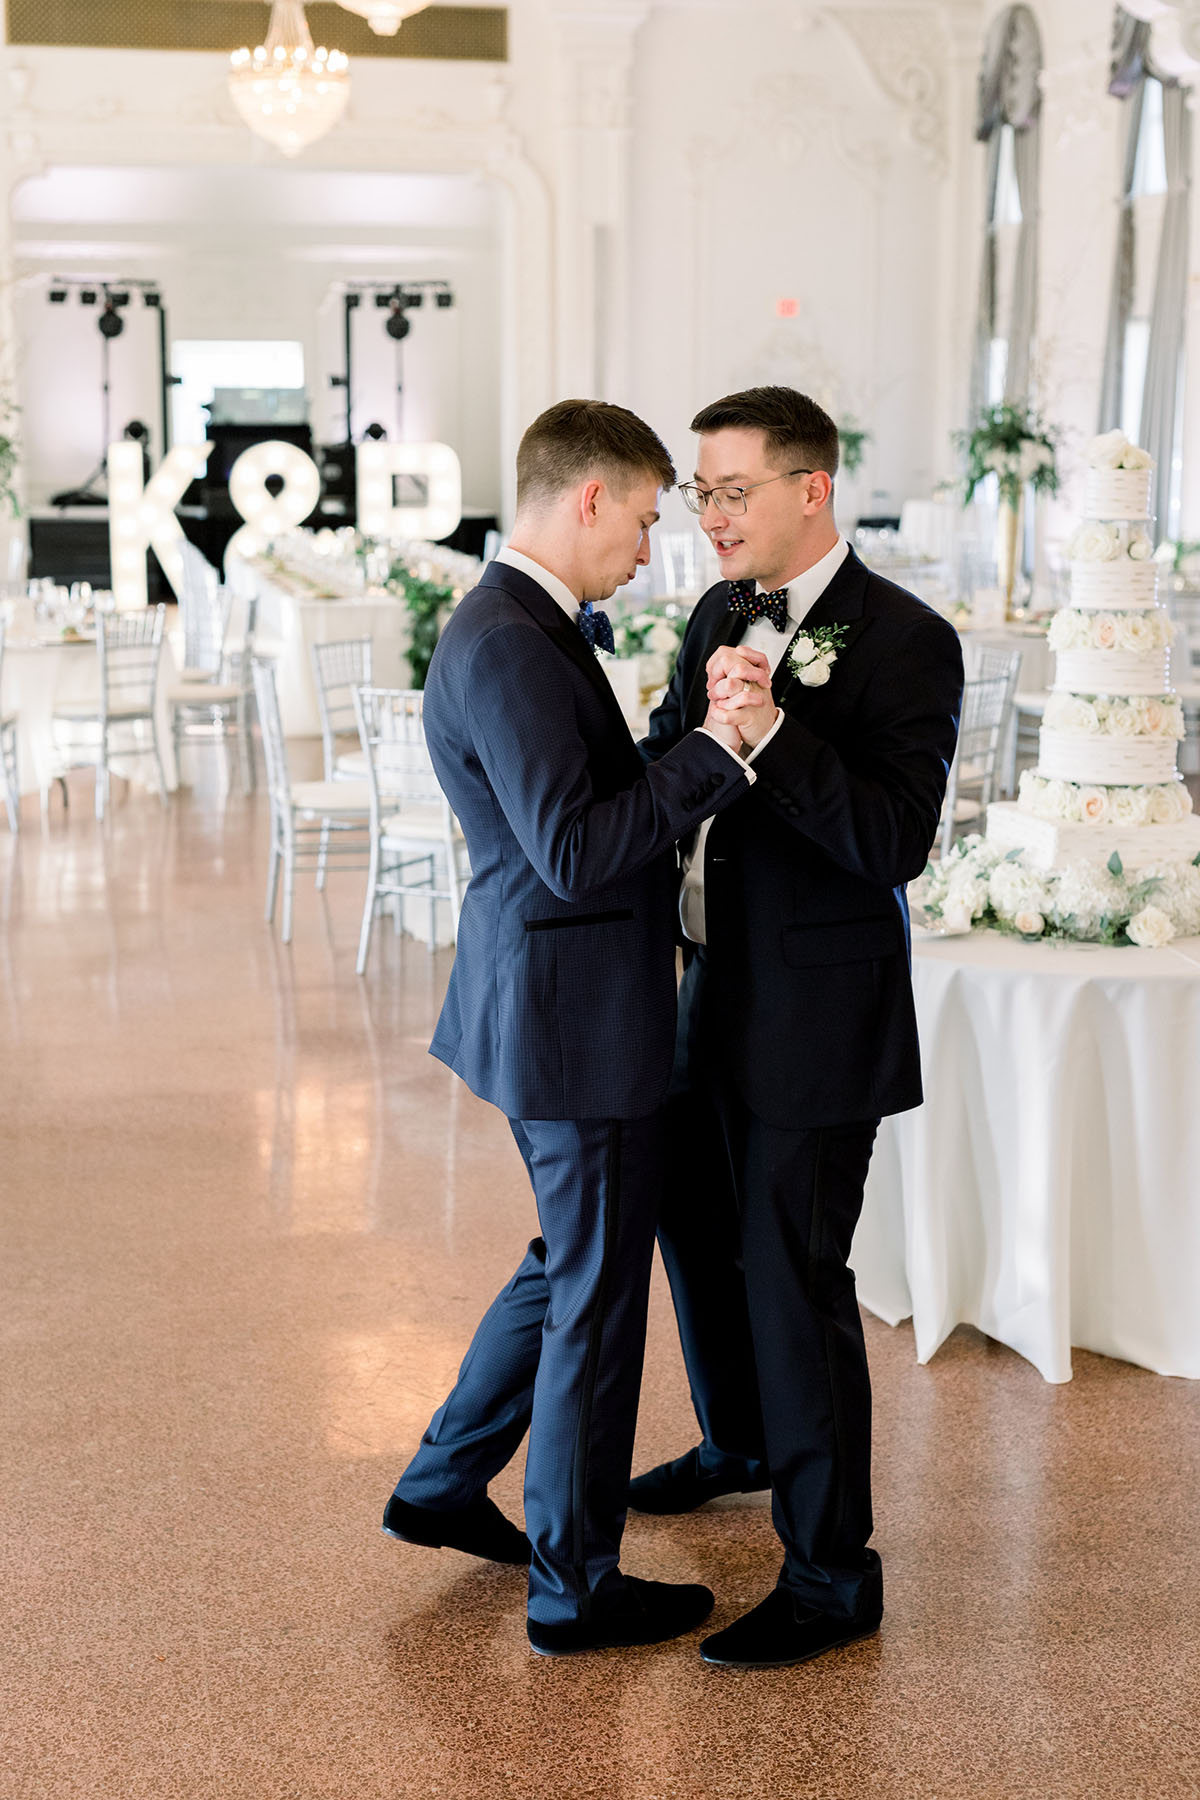 Elegant luxe historic hotel wedding in Tulsa, Oklahoma two grooms tuxedos bow ties luxurious gay wedding dance